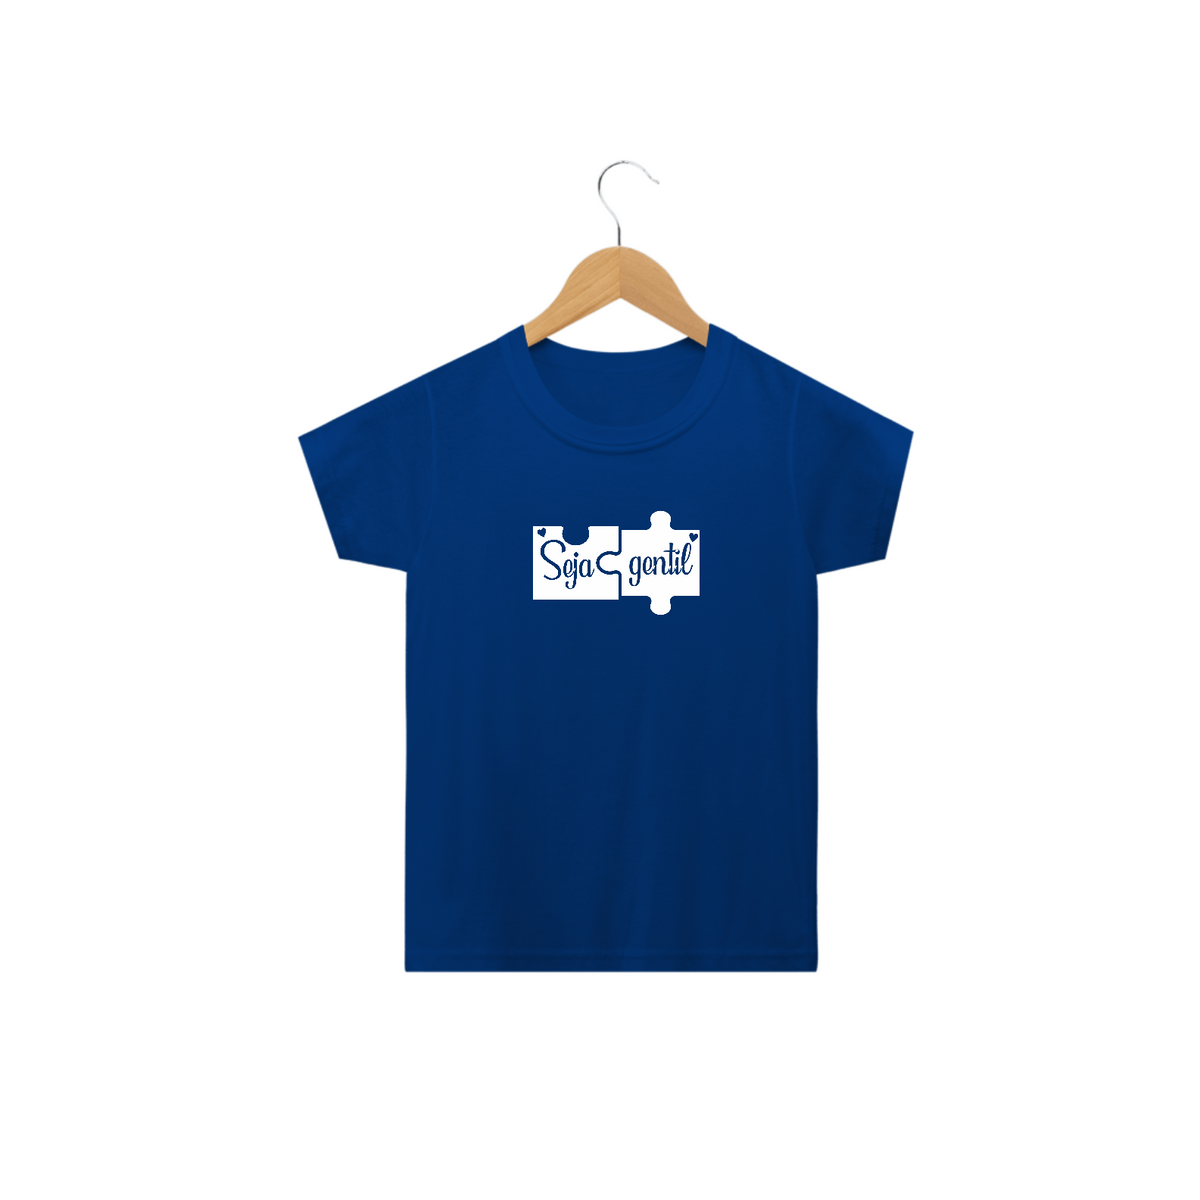 Nome do produto: T-shirt Infantil (seja gentil)